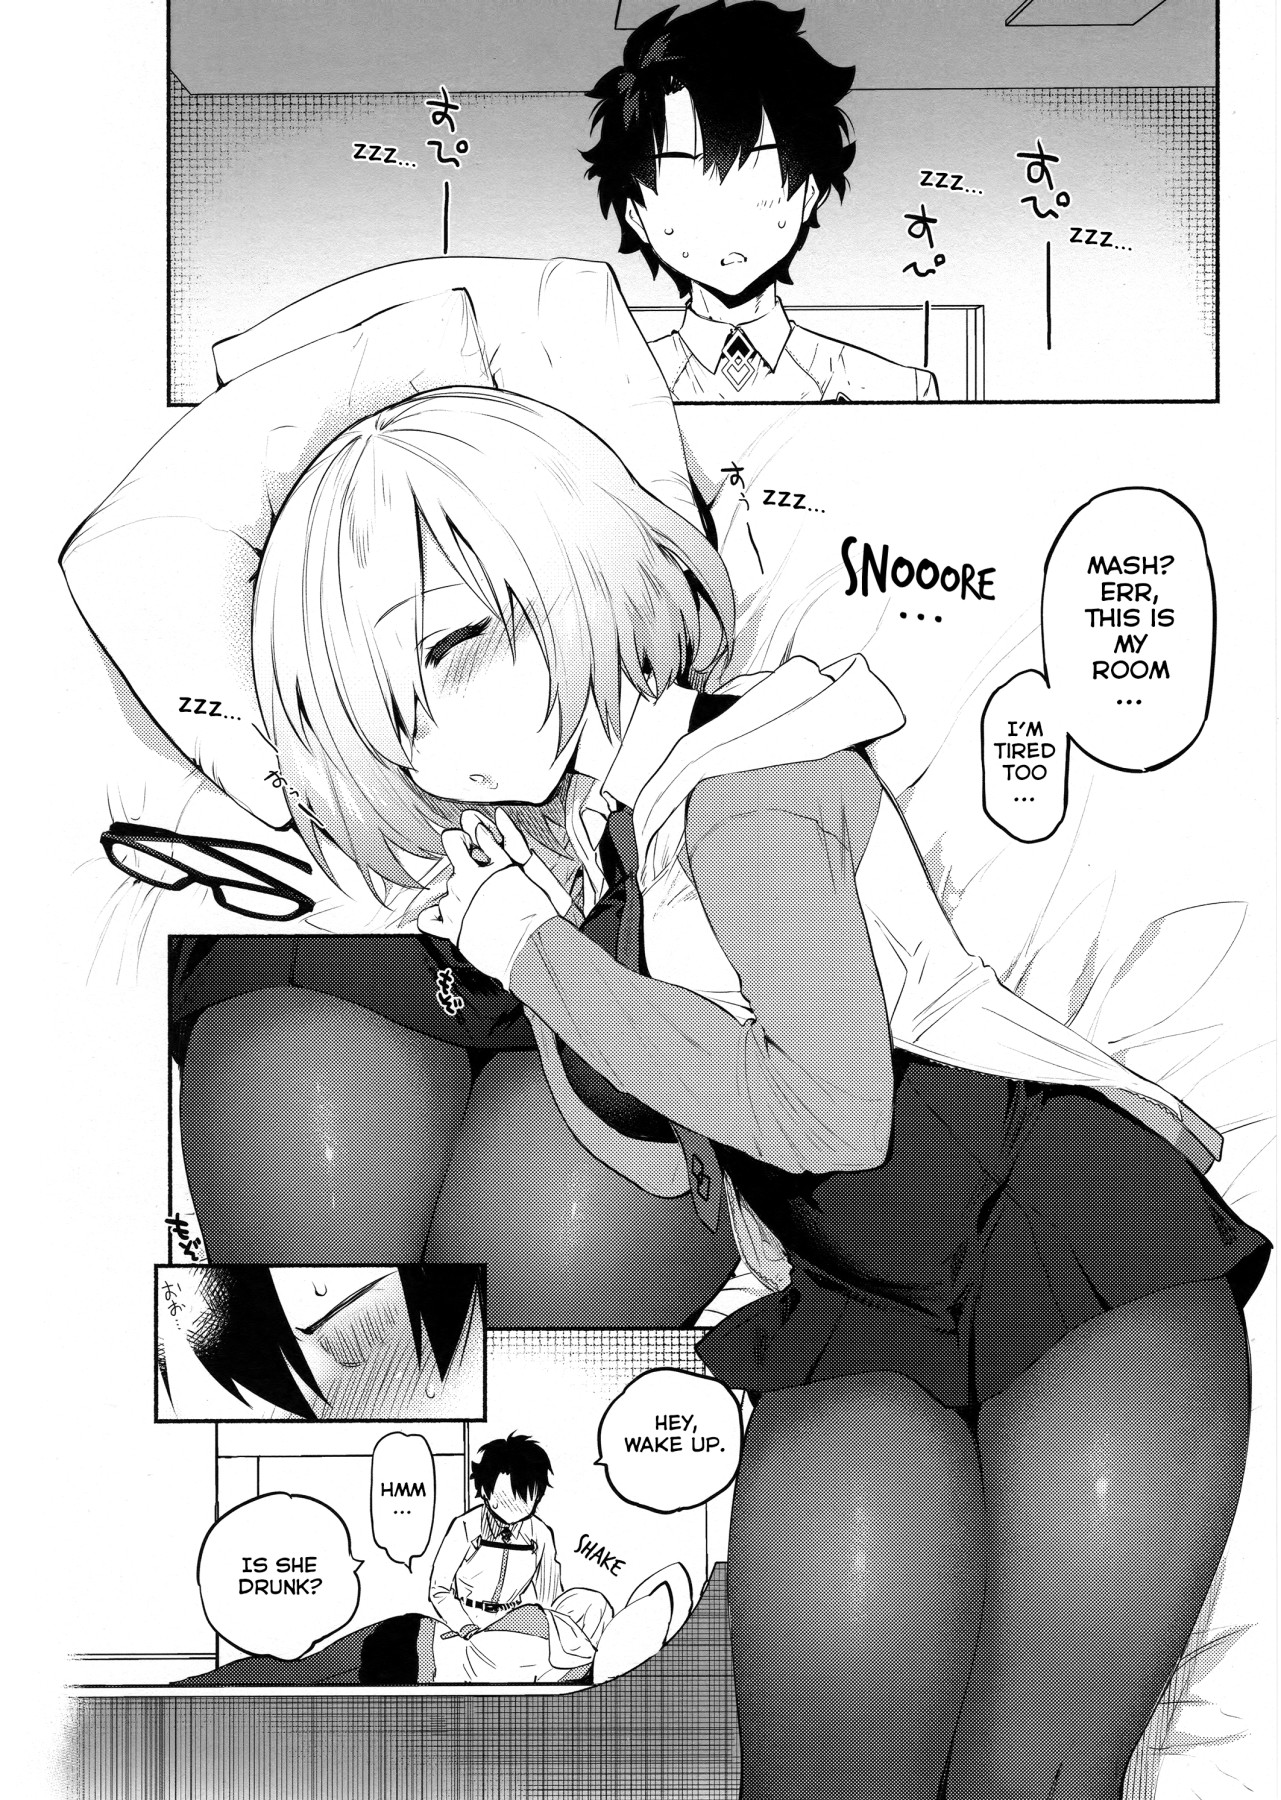 Hentai Manga Comic-Naughty Things Will Happen To Me While Sleeping...-Read-2